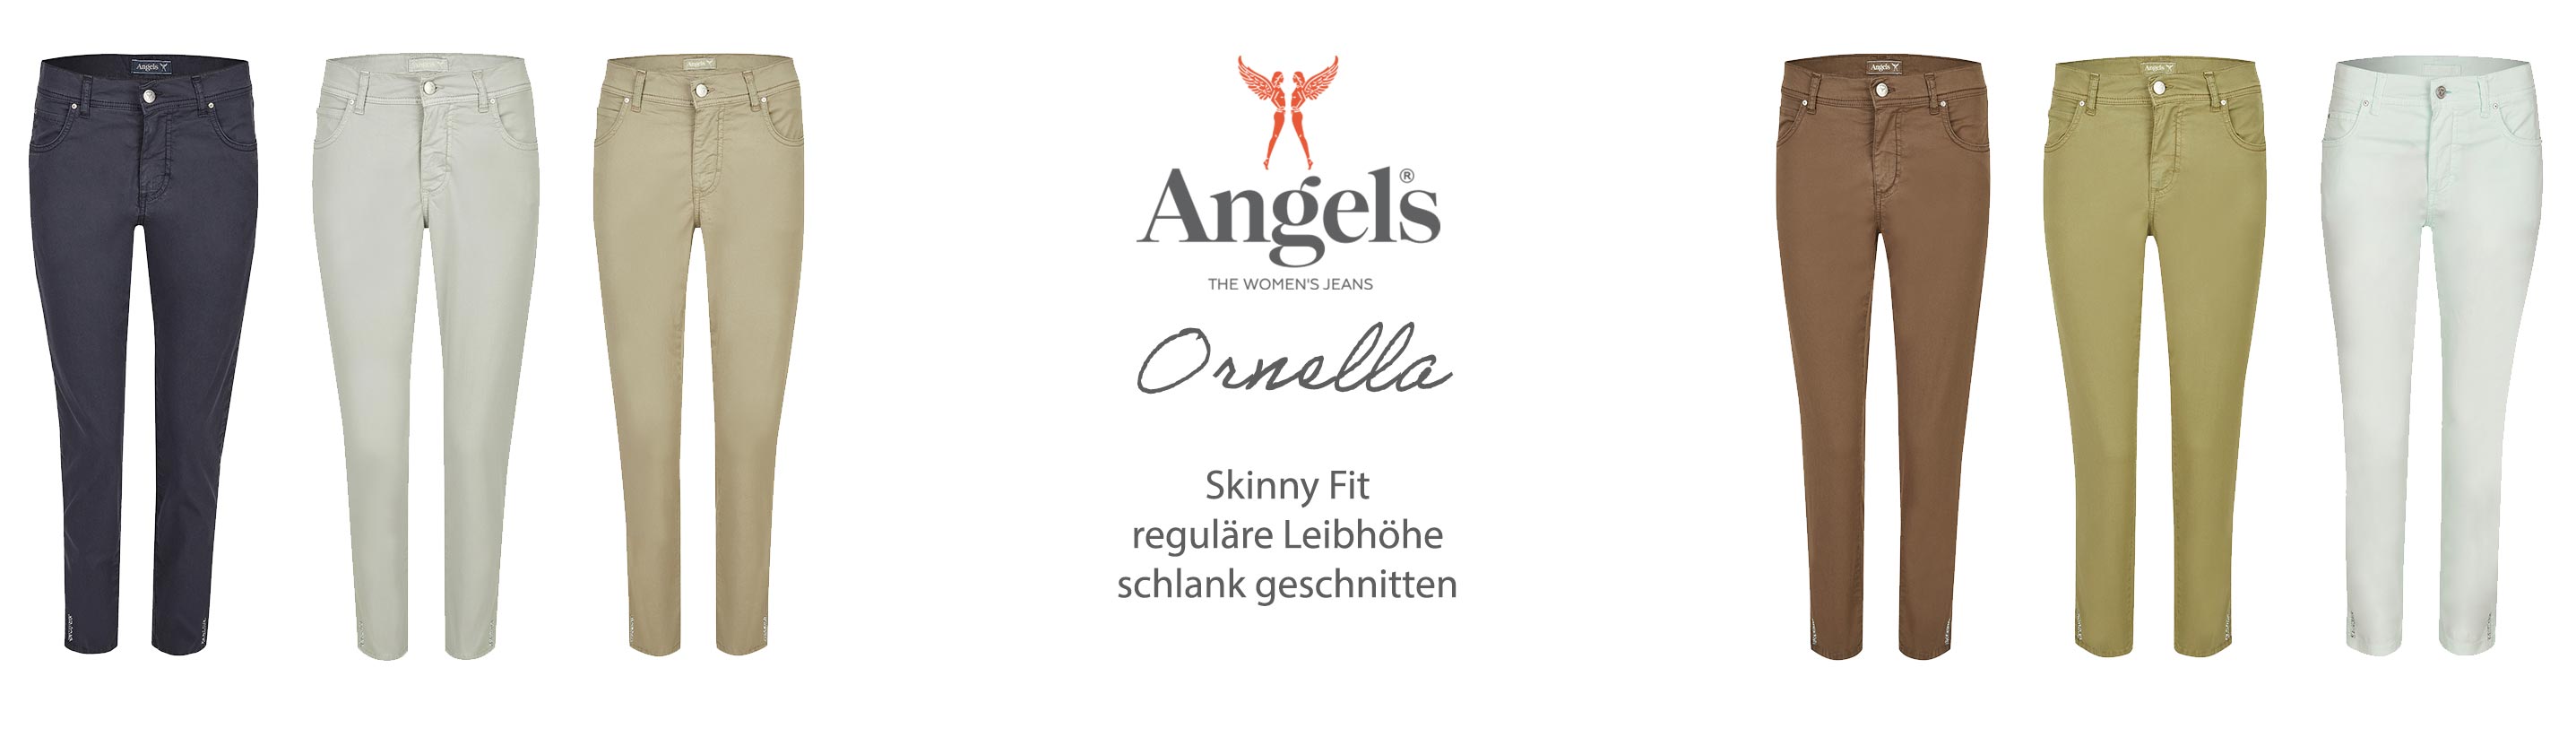 Angels Jeans Ornella